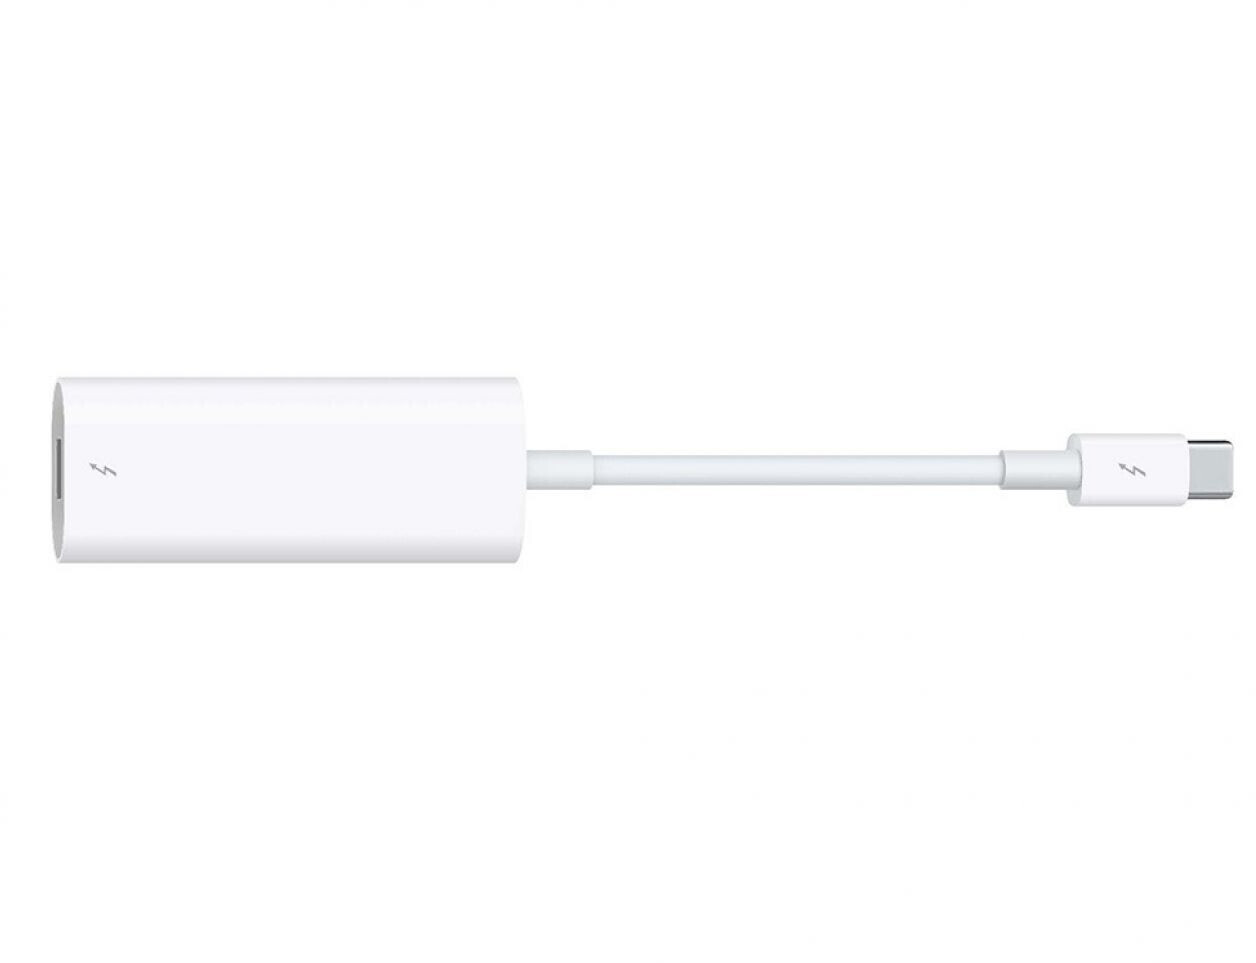 MMEL2ZM/A - Apple Adaptateur Thunderbolt 3 (USB-C) vers Thunderbolt 2